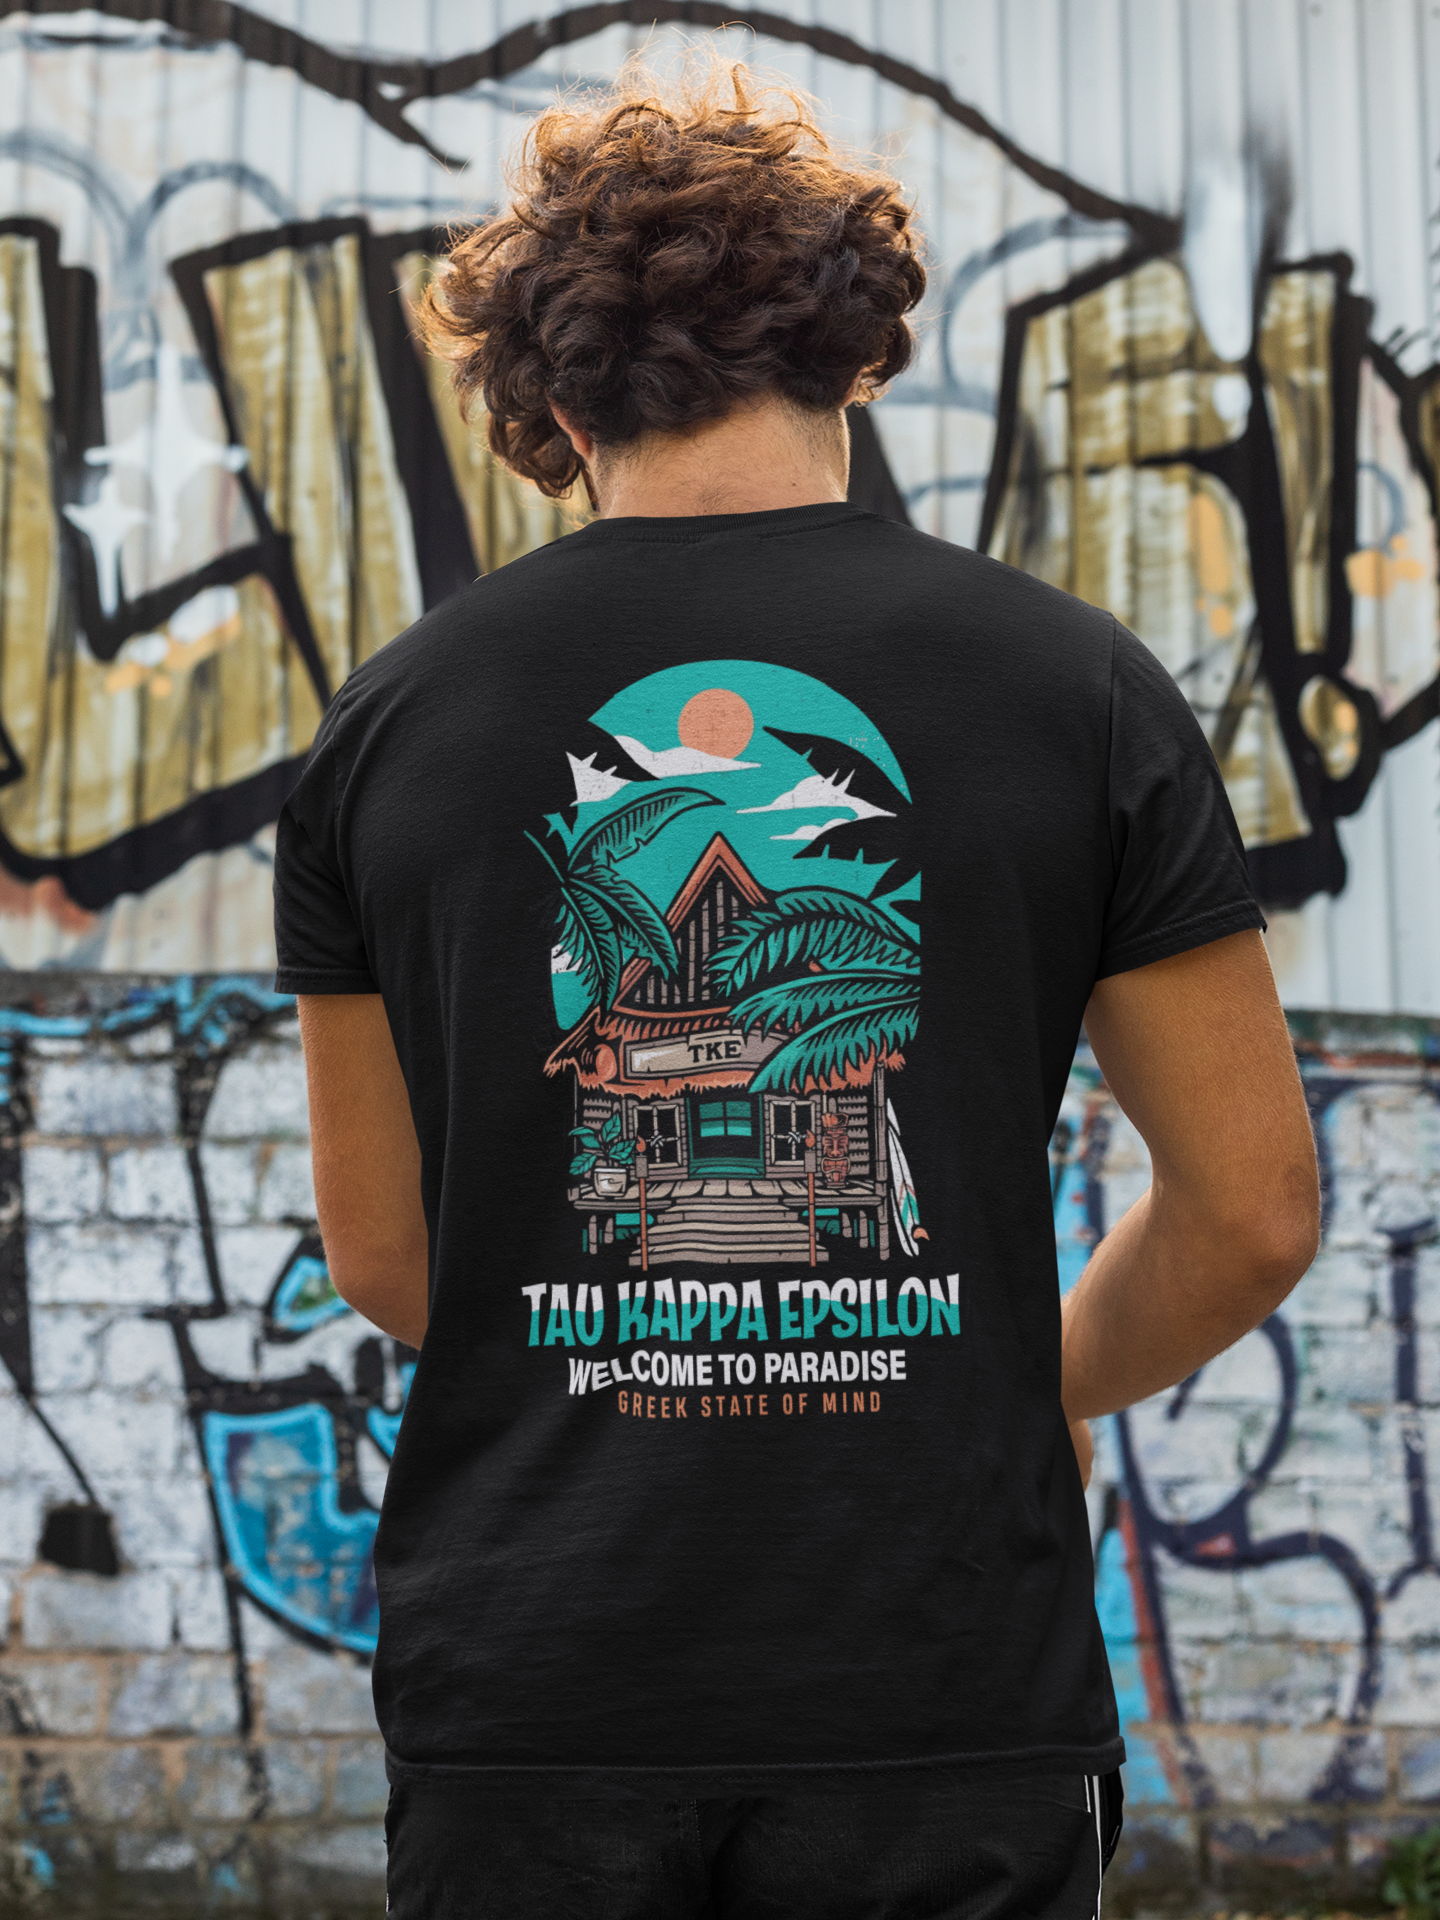 Tau Kappa Epsilon Graphic T-Shirt | Welcome to Paradise | Tau Kappa Epsilon Fraternity model 